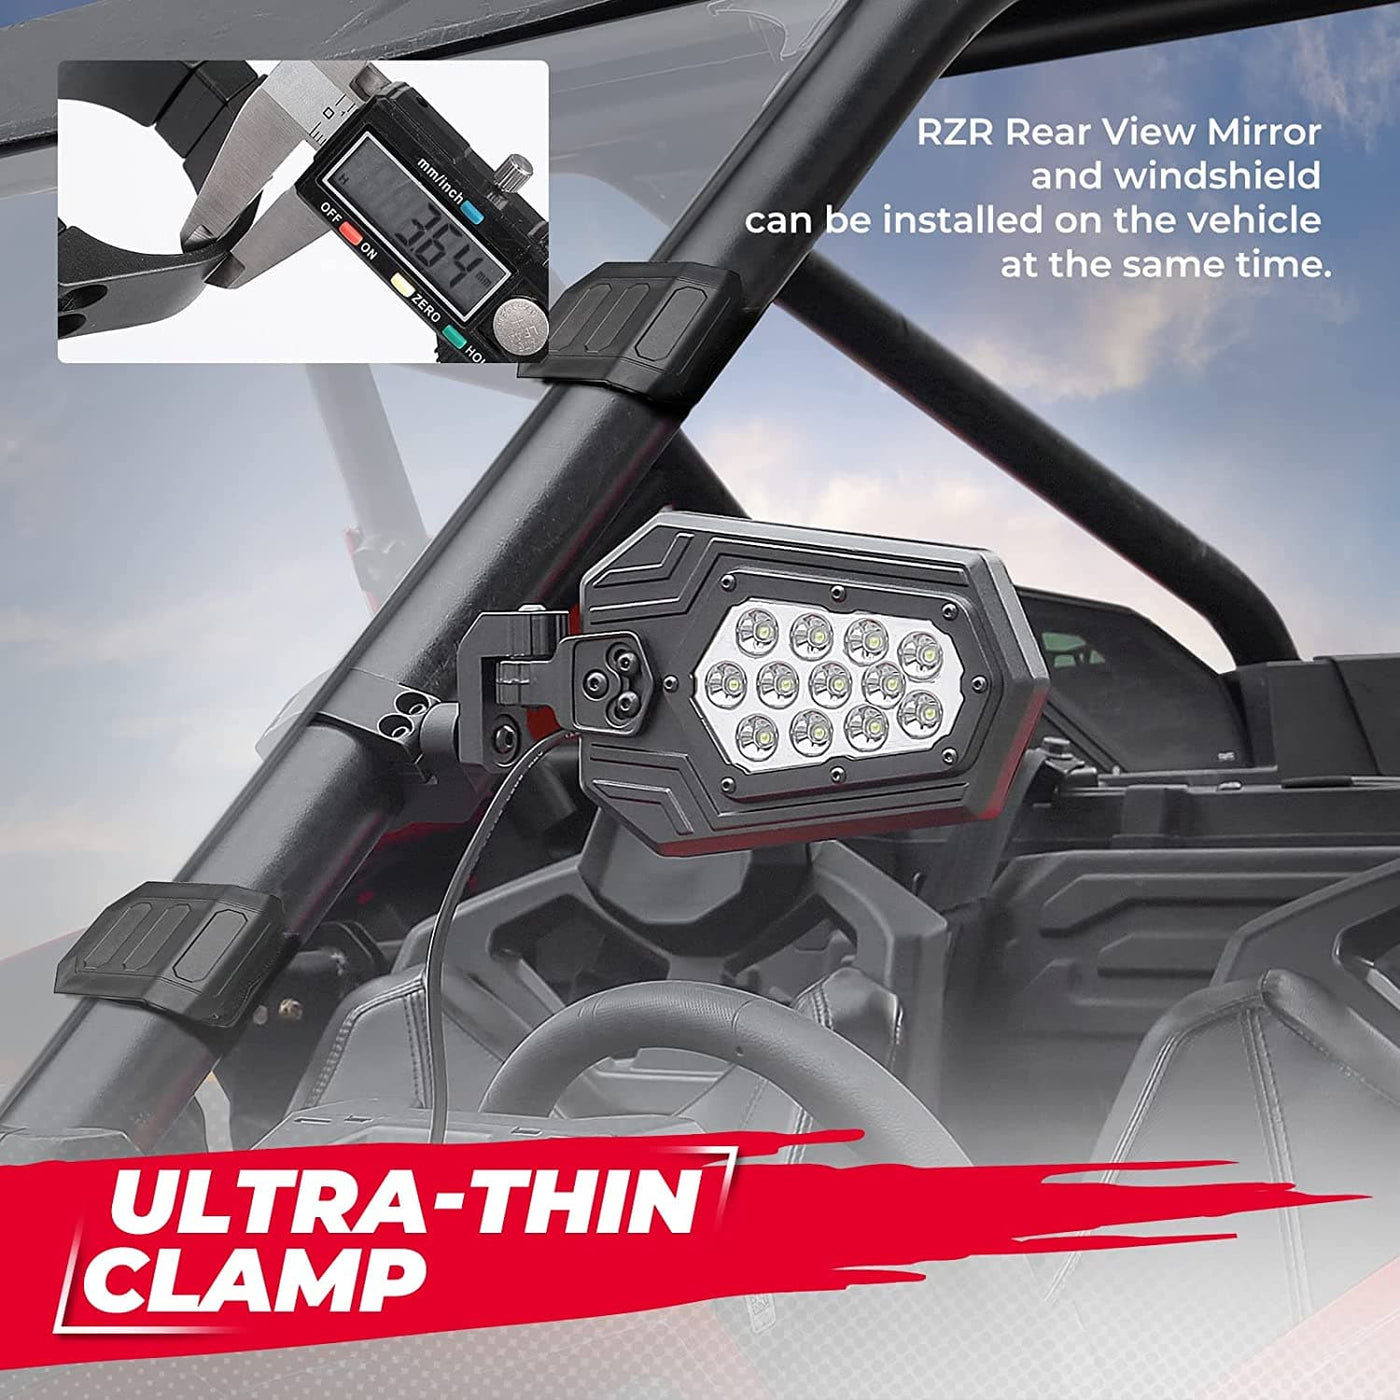 UTV Side Rear View Mirrors Fits 1.75" - 2" Roll Bar For Can-am Maverick X3, Polaris RZR XP 1000, Ranger, Kawasaki - Kemimoto